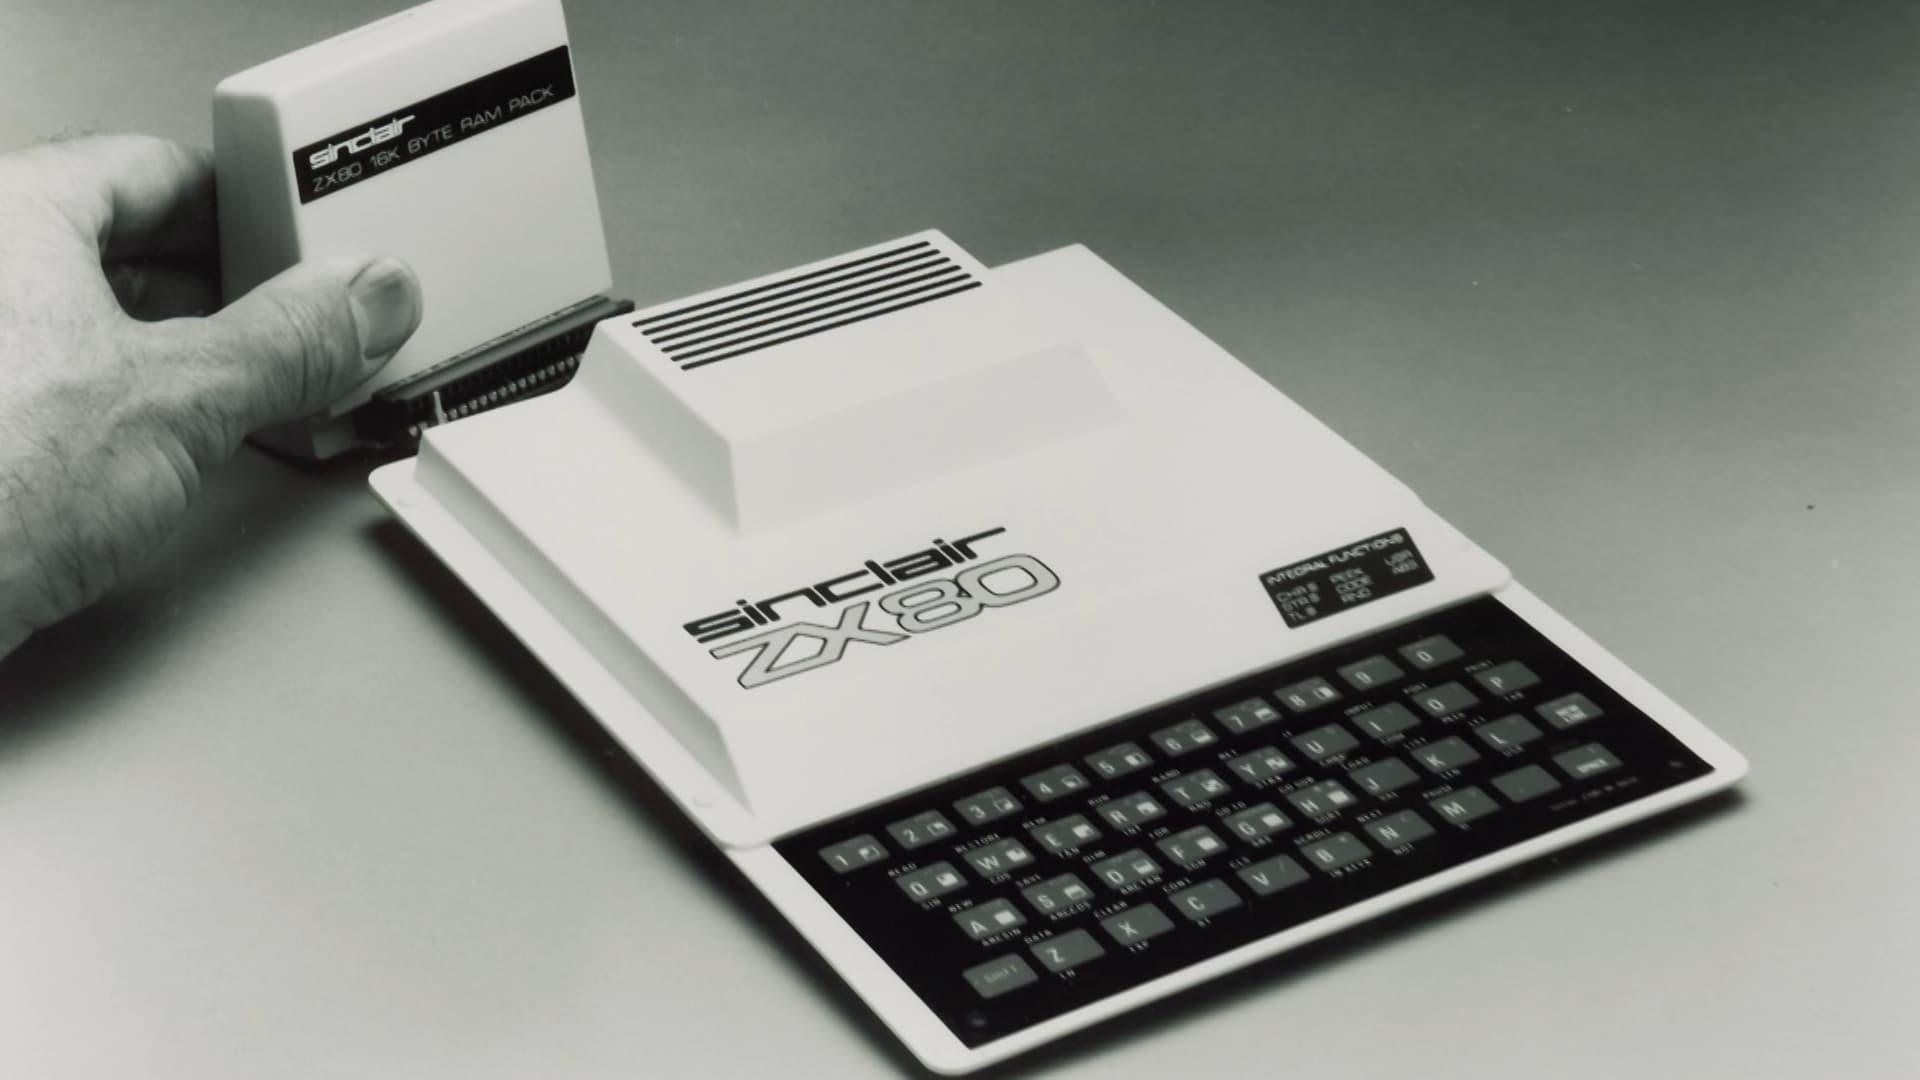 8 Bit Generation: The Commodore Wars backdrop